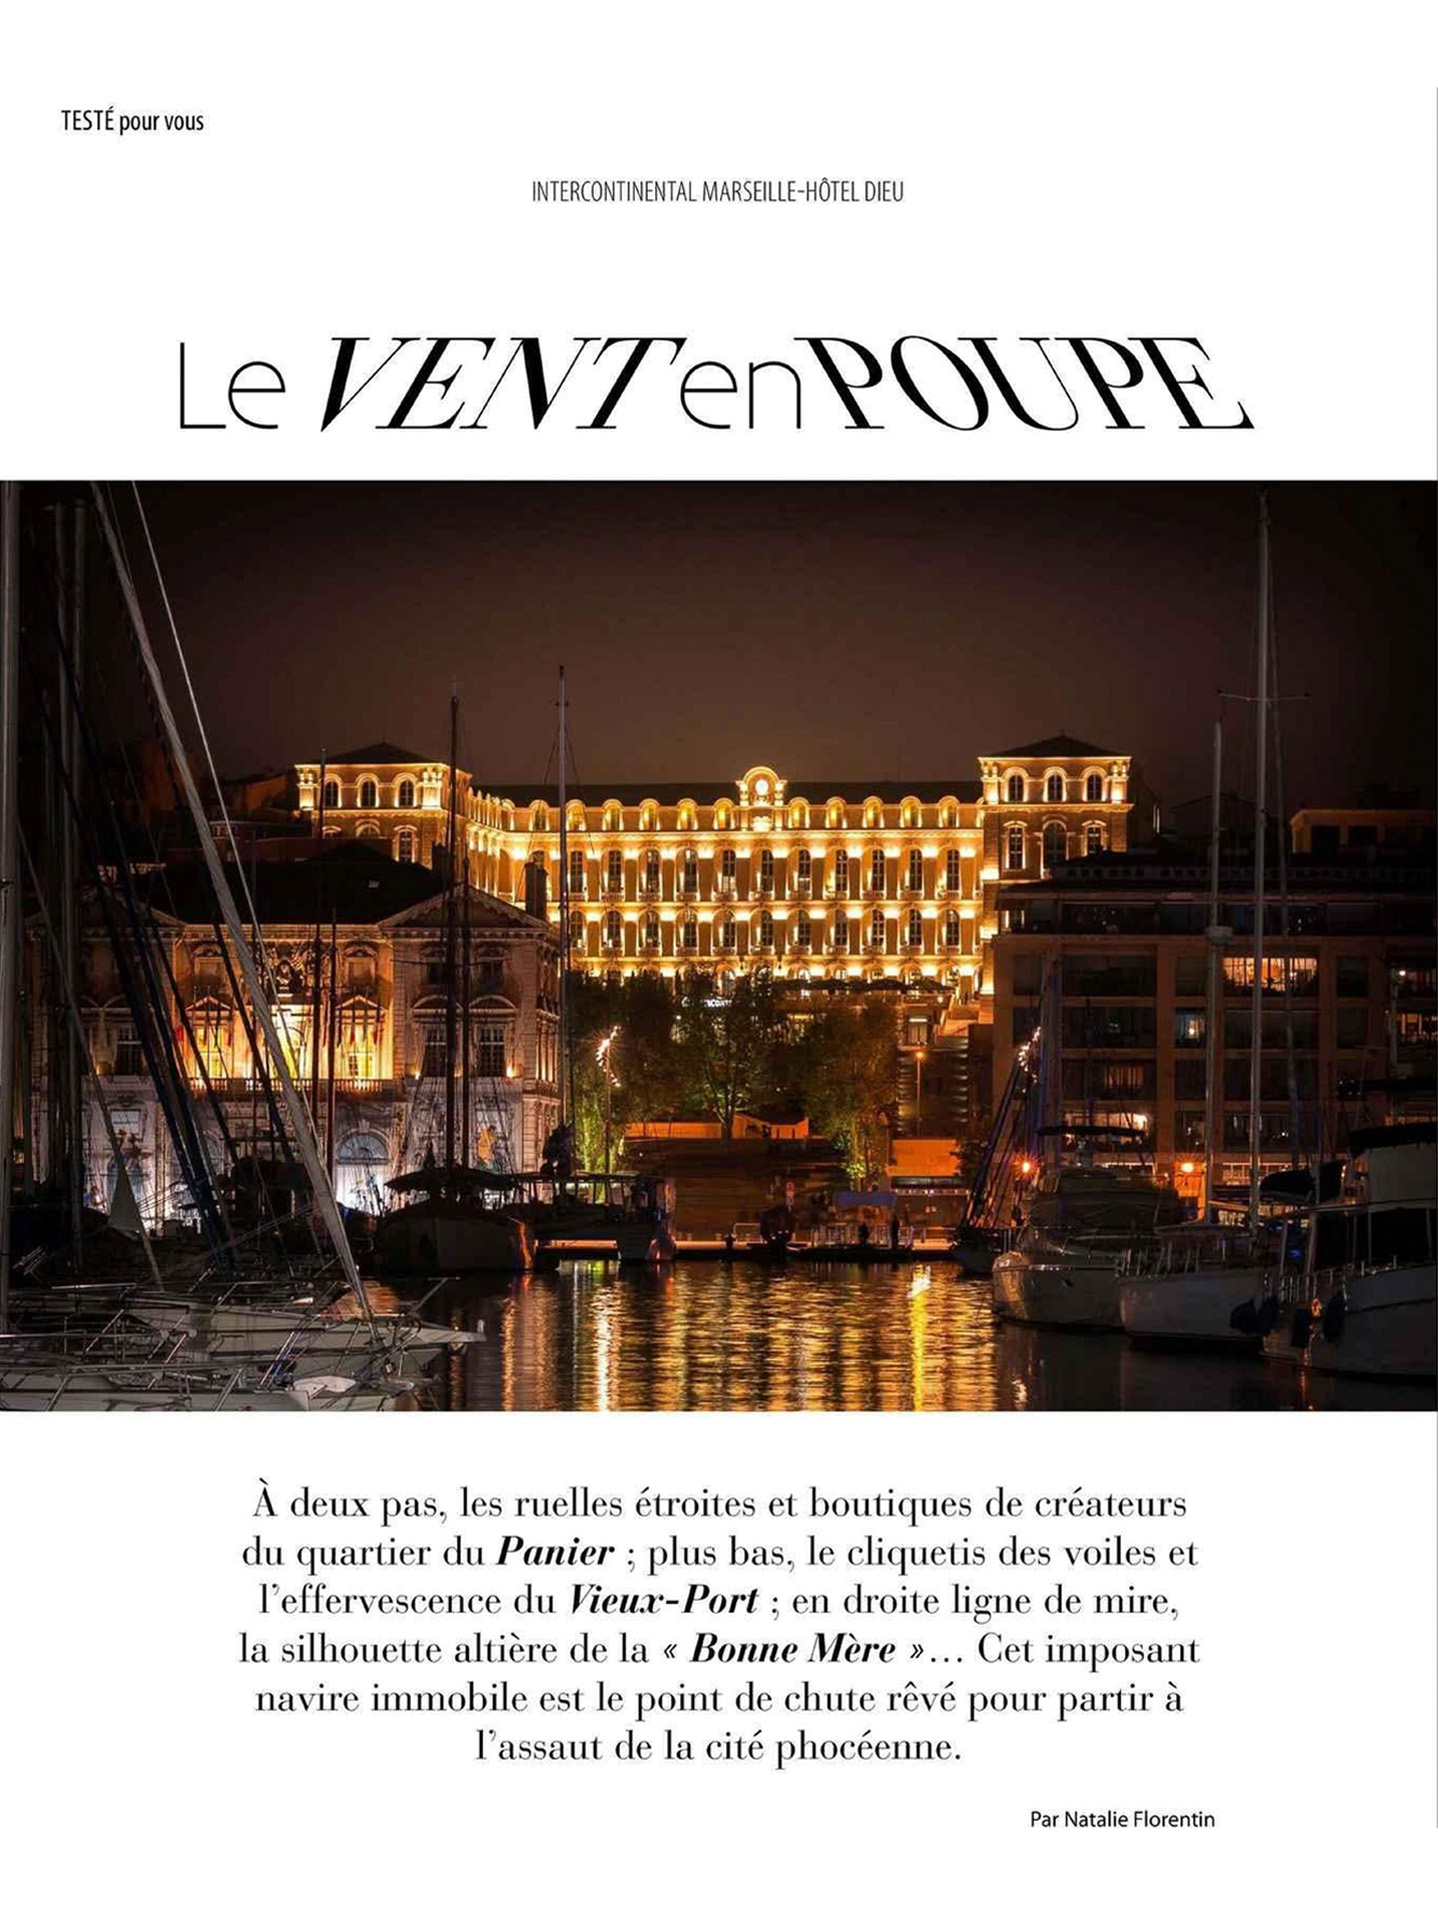 Article on InterContinental Marseille hotel dieu, studio jean-philippe nuel, notre dame de la garde, 5 star luxury hotel, interior design, luxury hotel, interior design